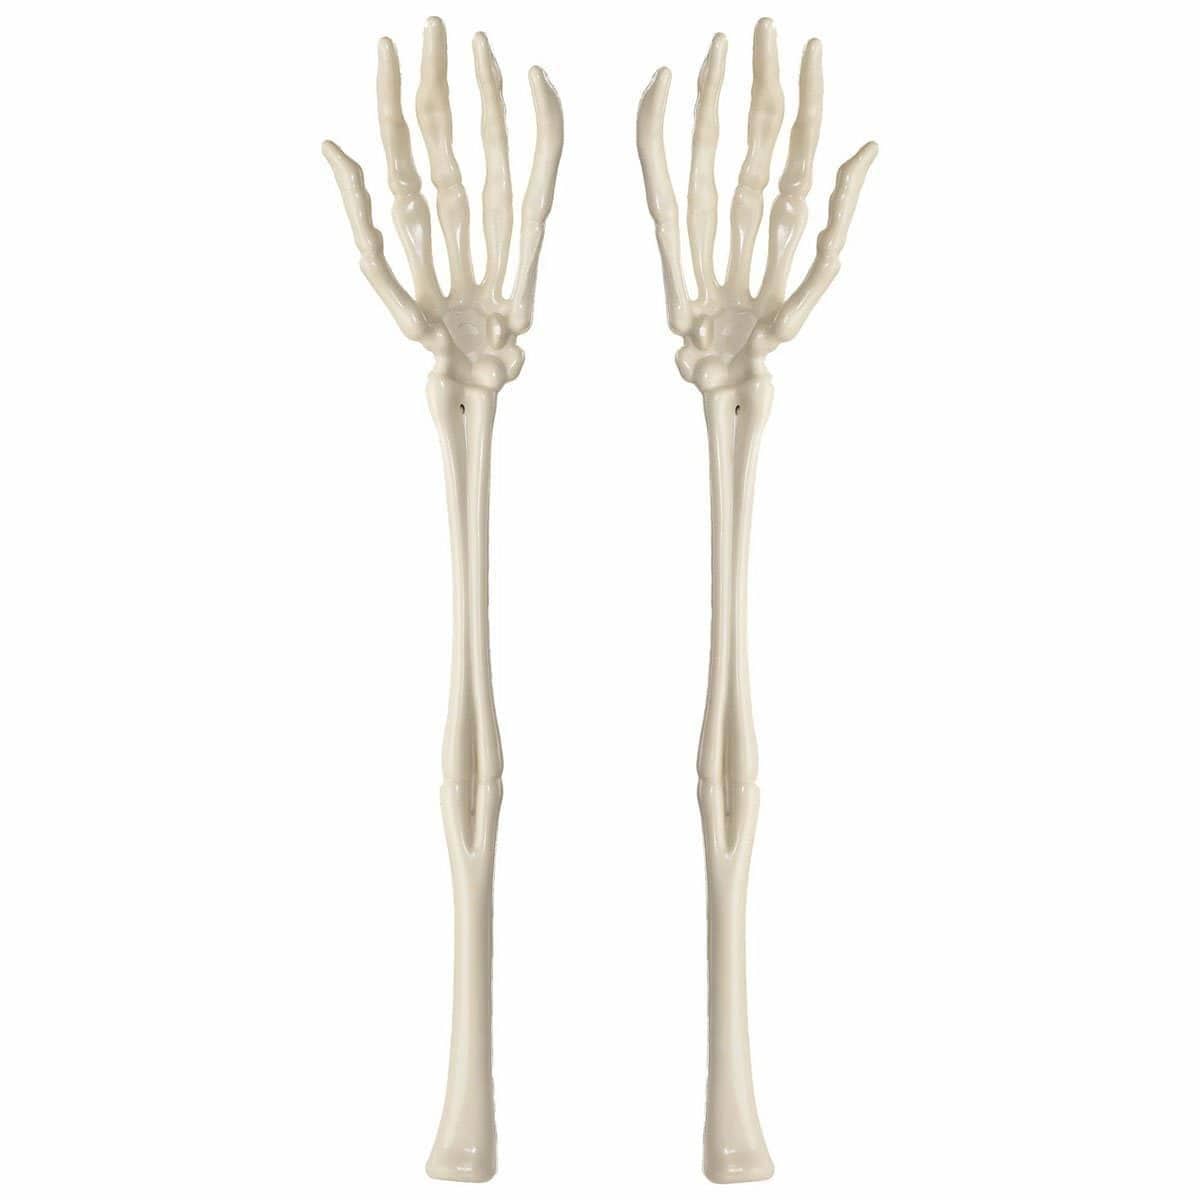 Buy Halloween Skeleton Hand Serving Ustensils sold at Party Expert